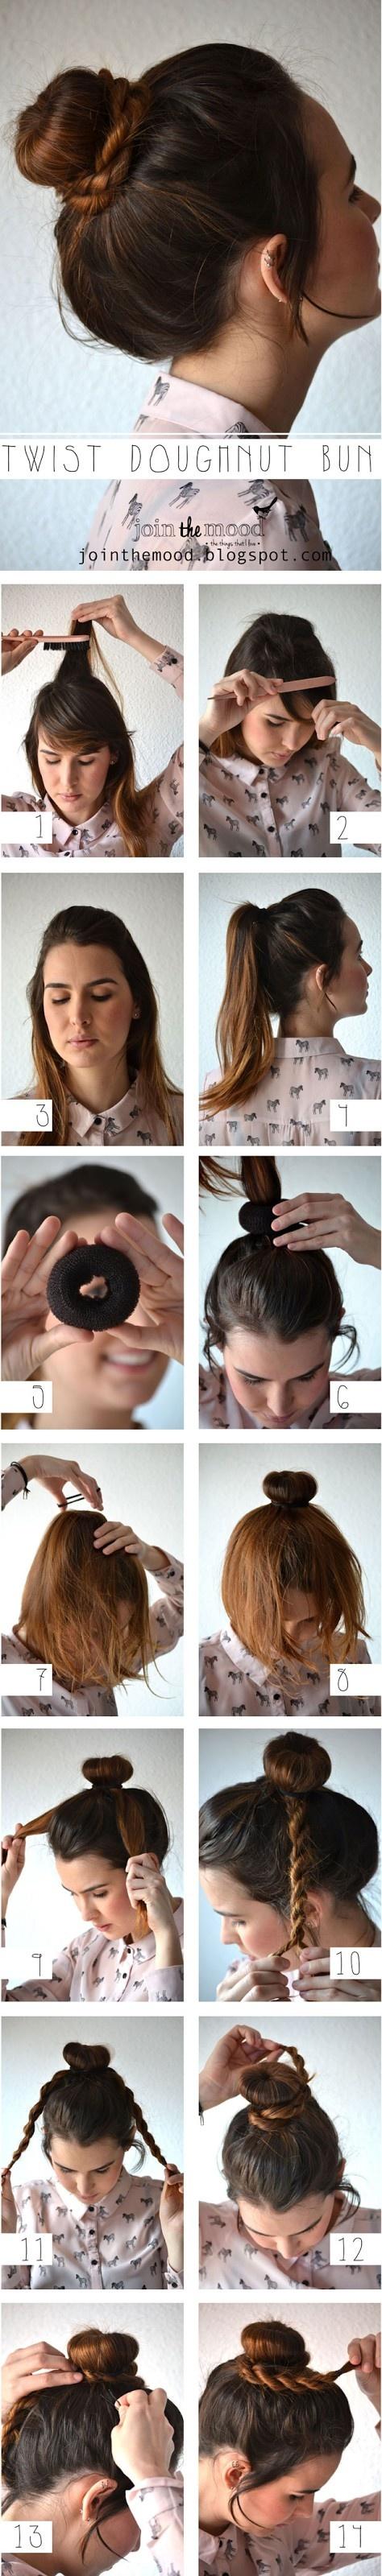 DIY Twist Doughnut Bun Hairstyle via